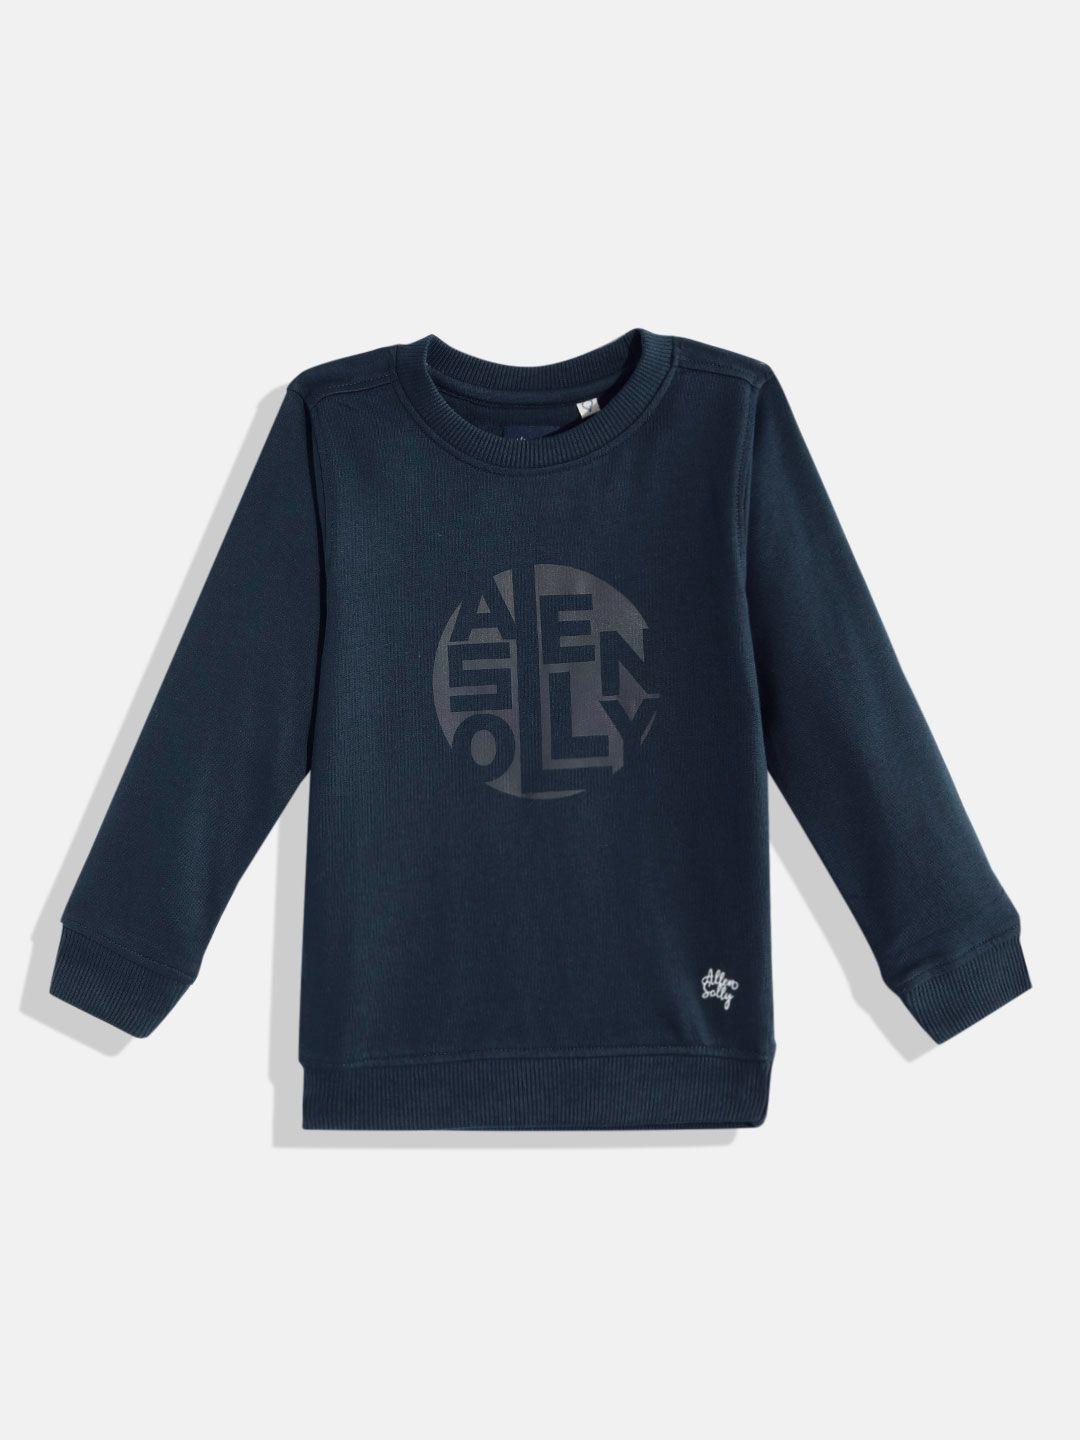 allen solly junior boys navy blue pure cotton brand logo print sweatshirt